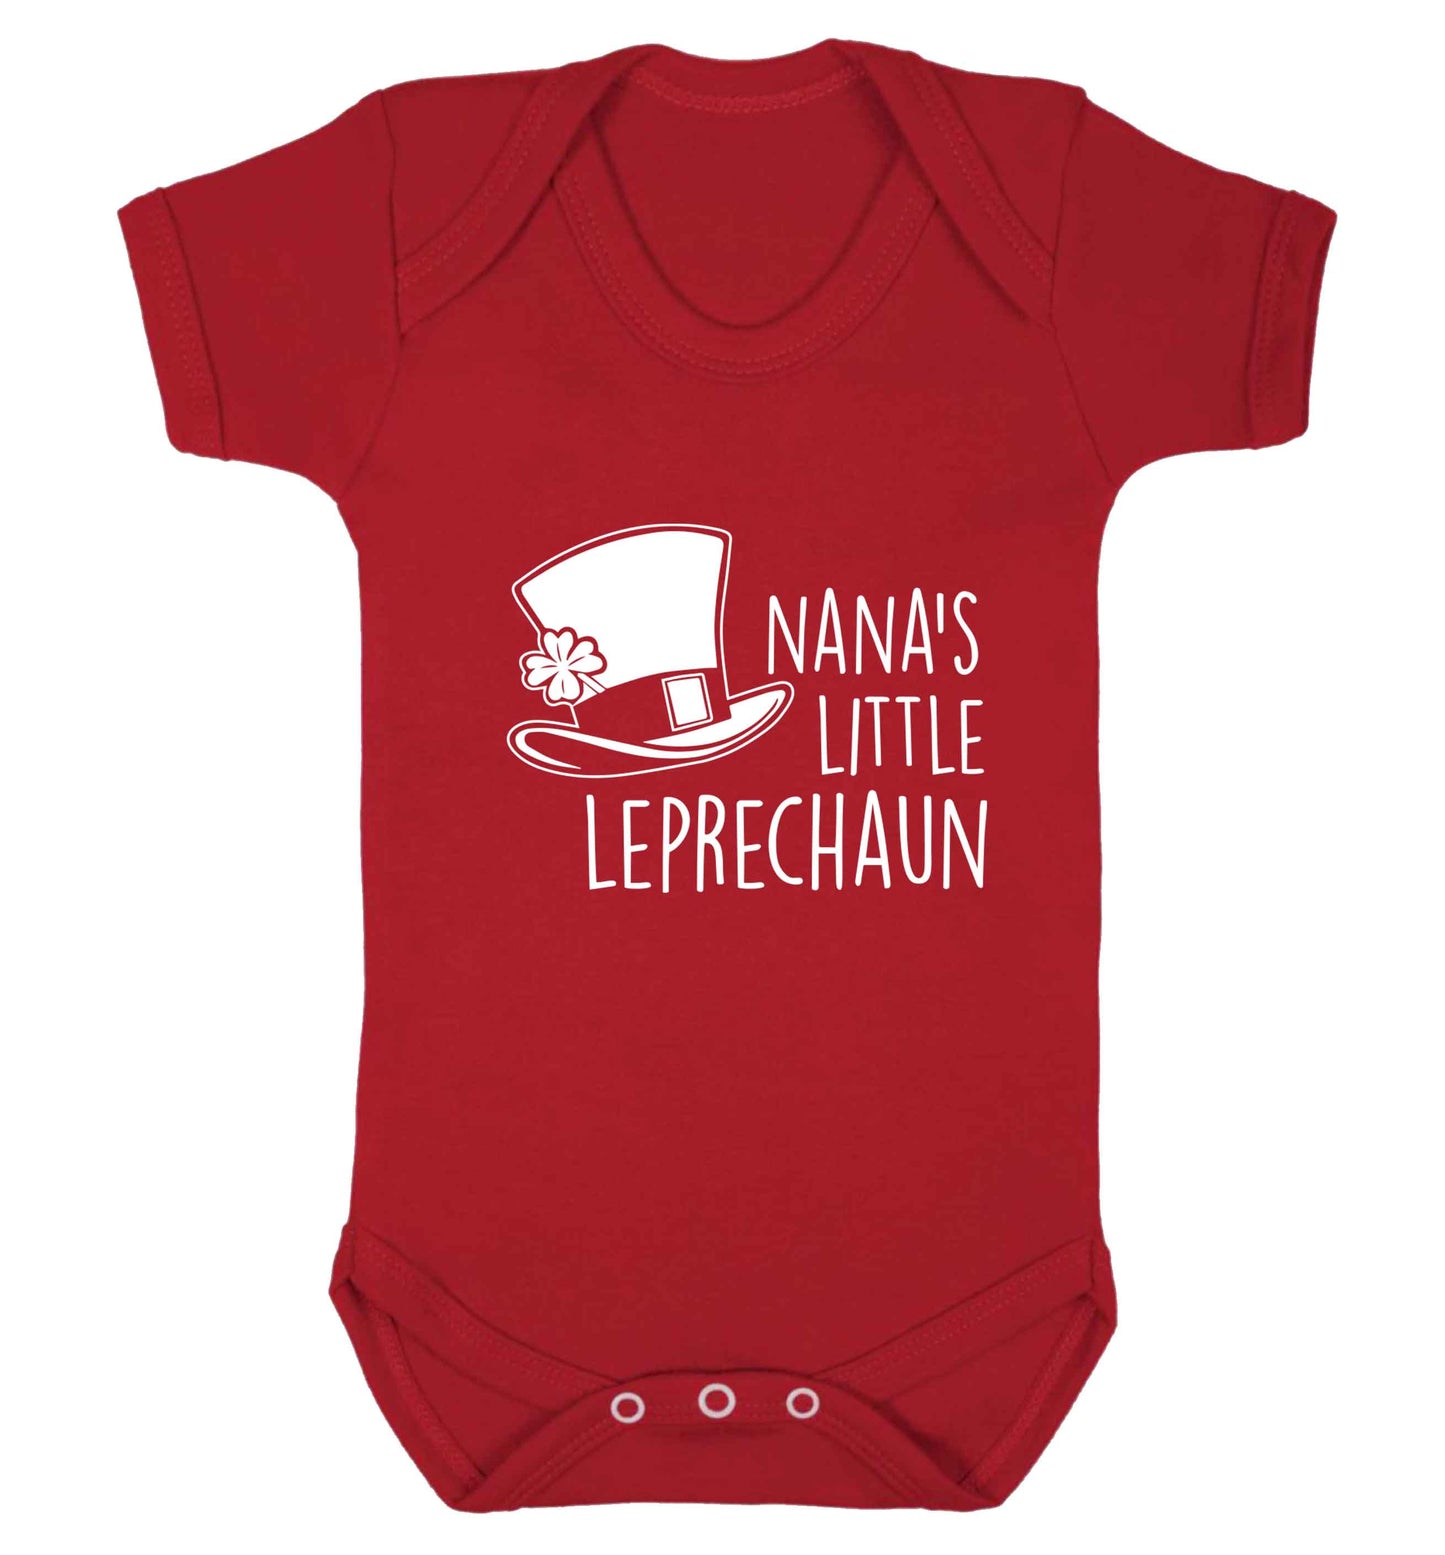 Nana's little leprechaun baby vest red 18-24 months